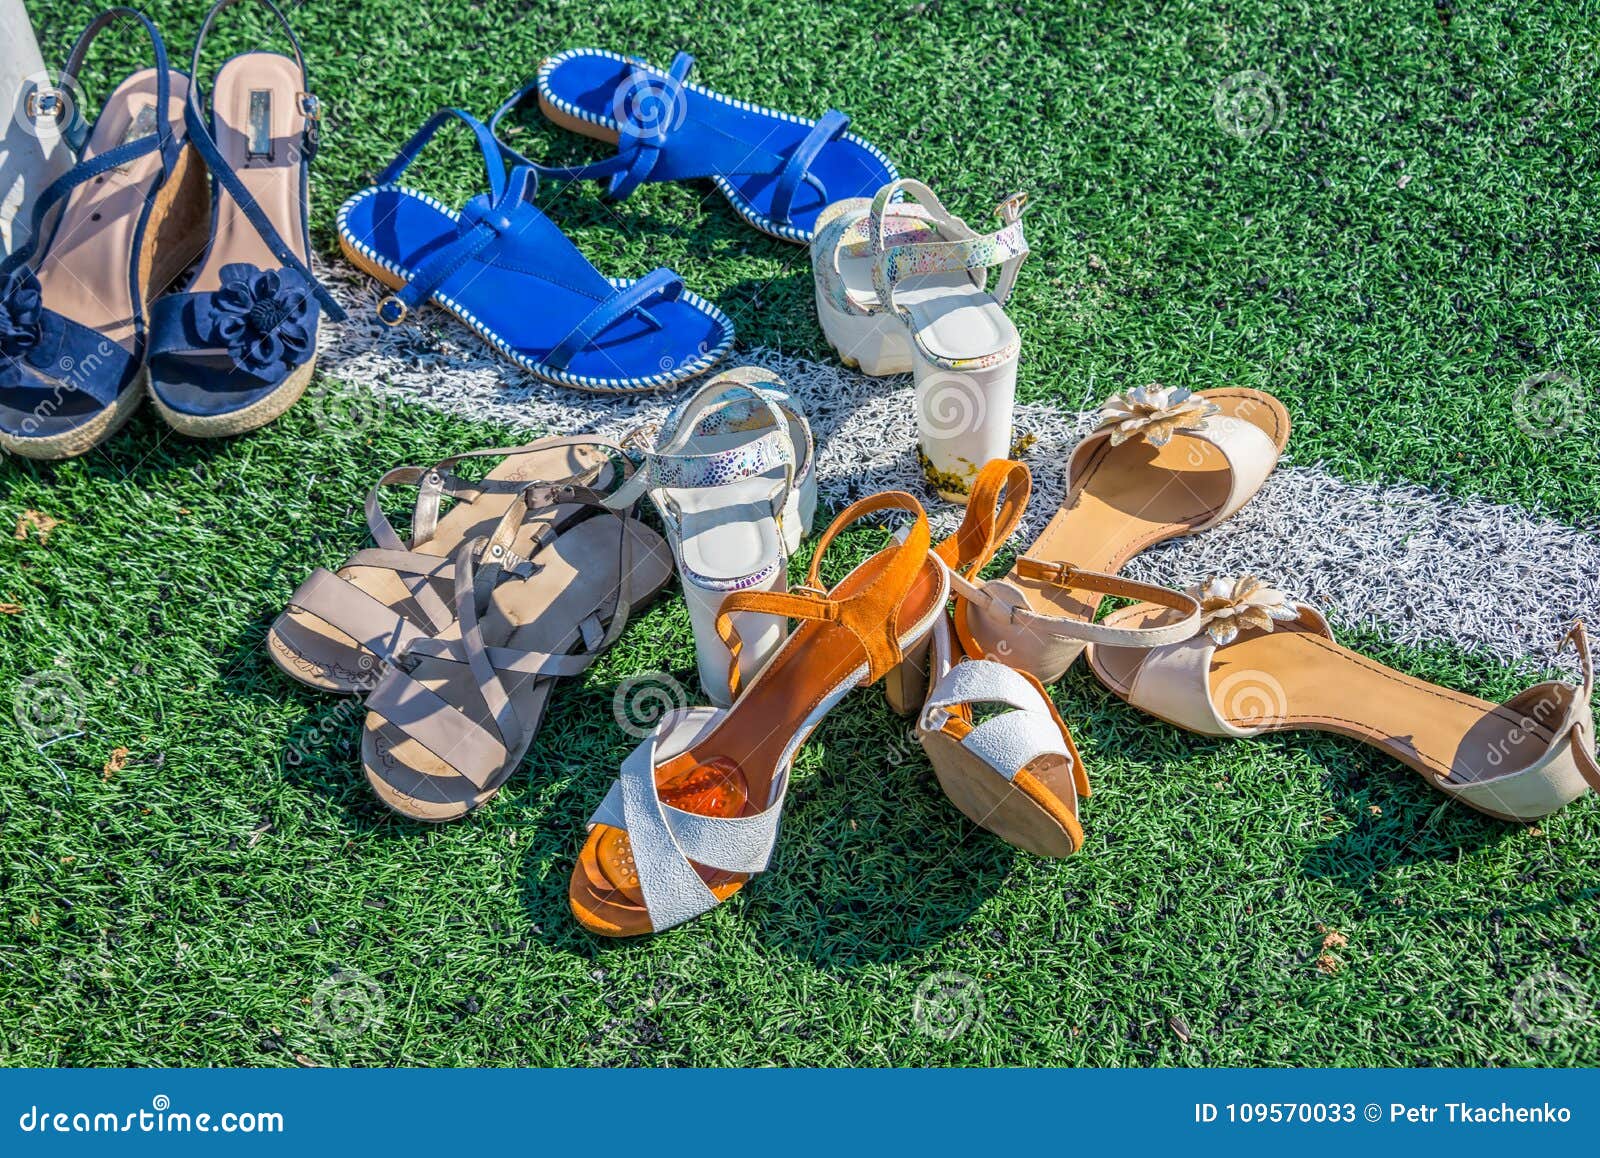 women`s shoes on a grass